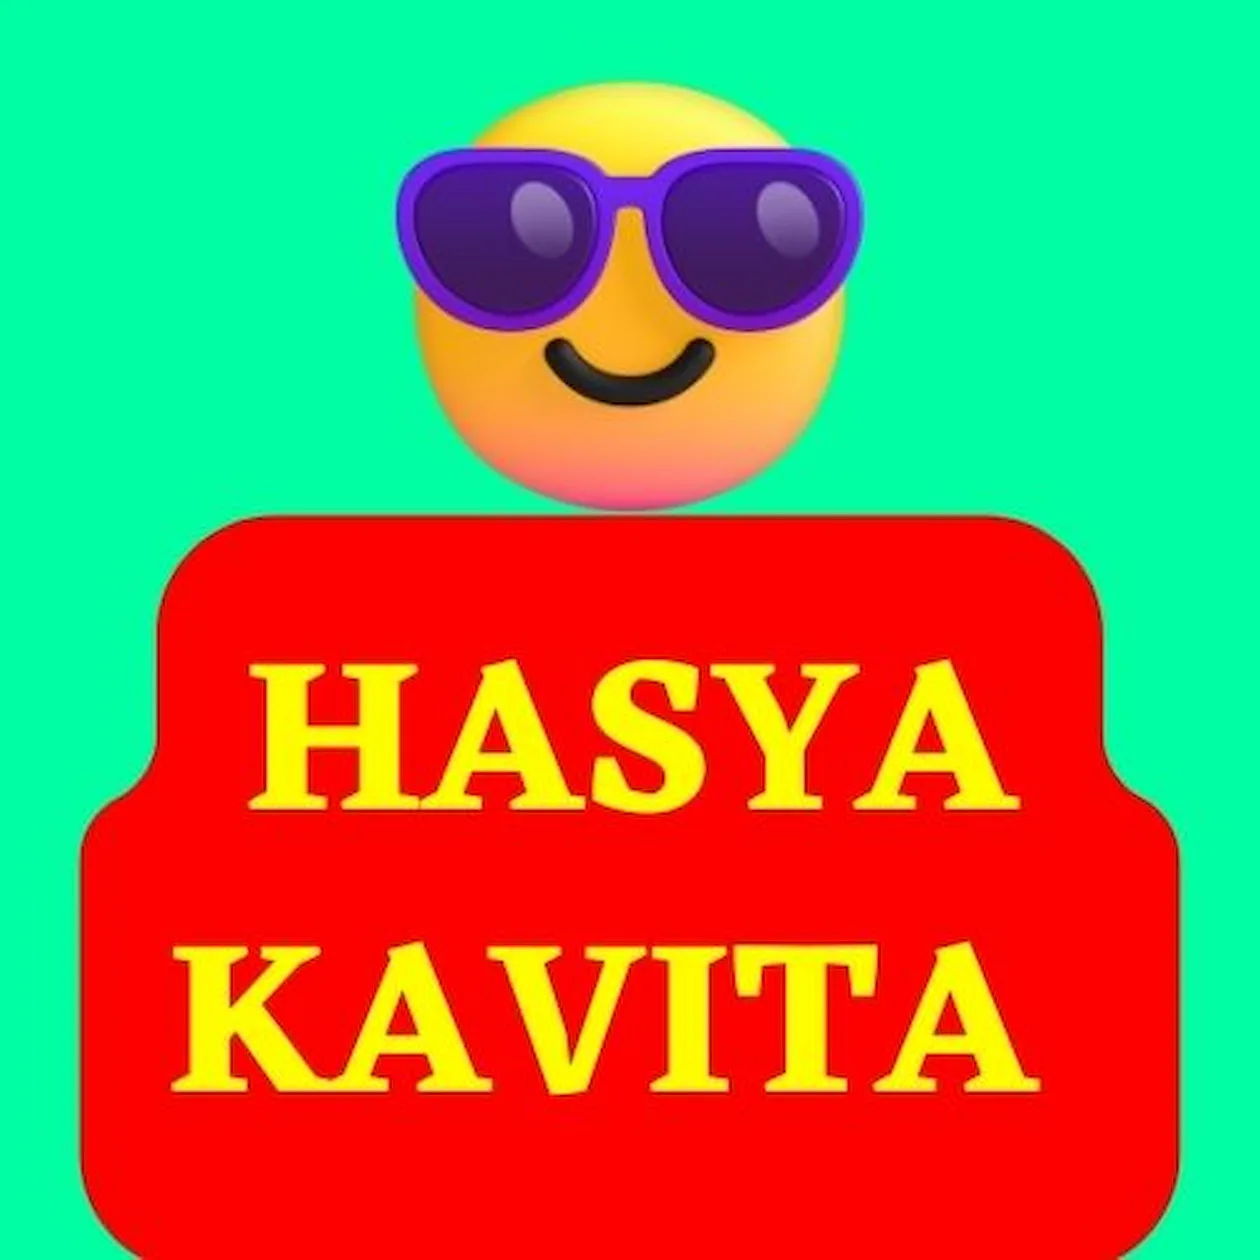 An emoji wearing goggles and text written in English Hasya kavita.